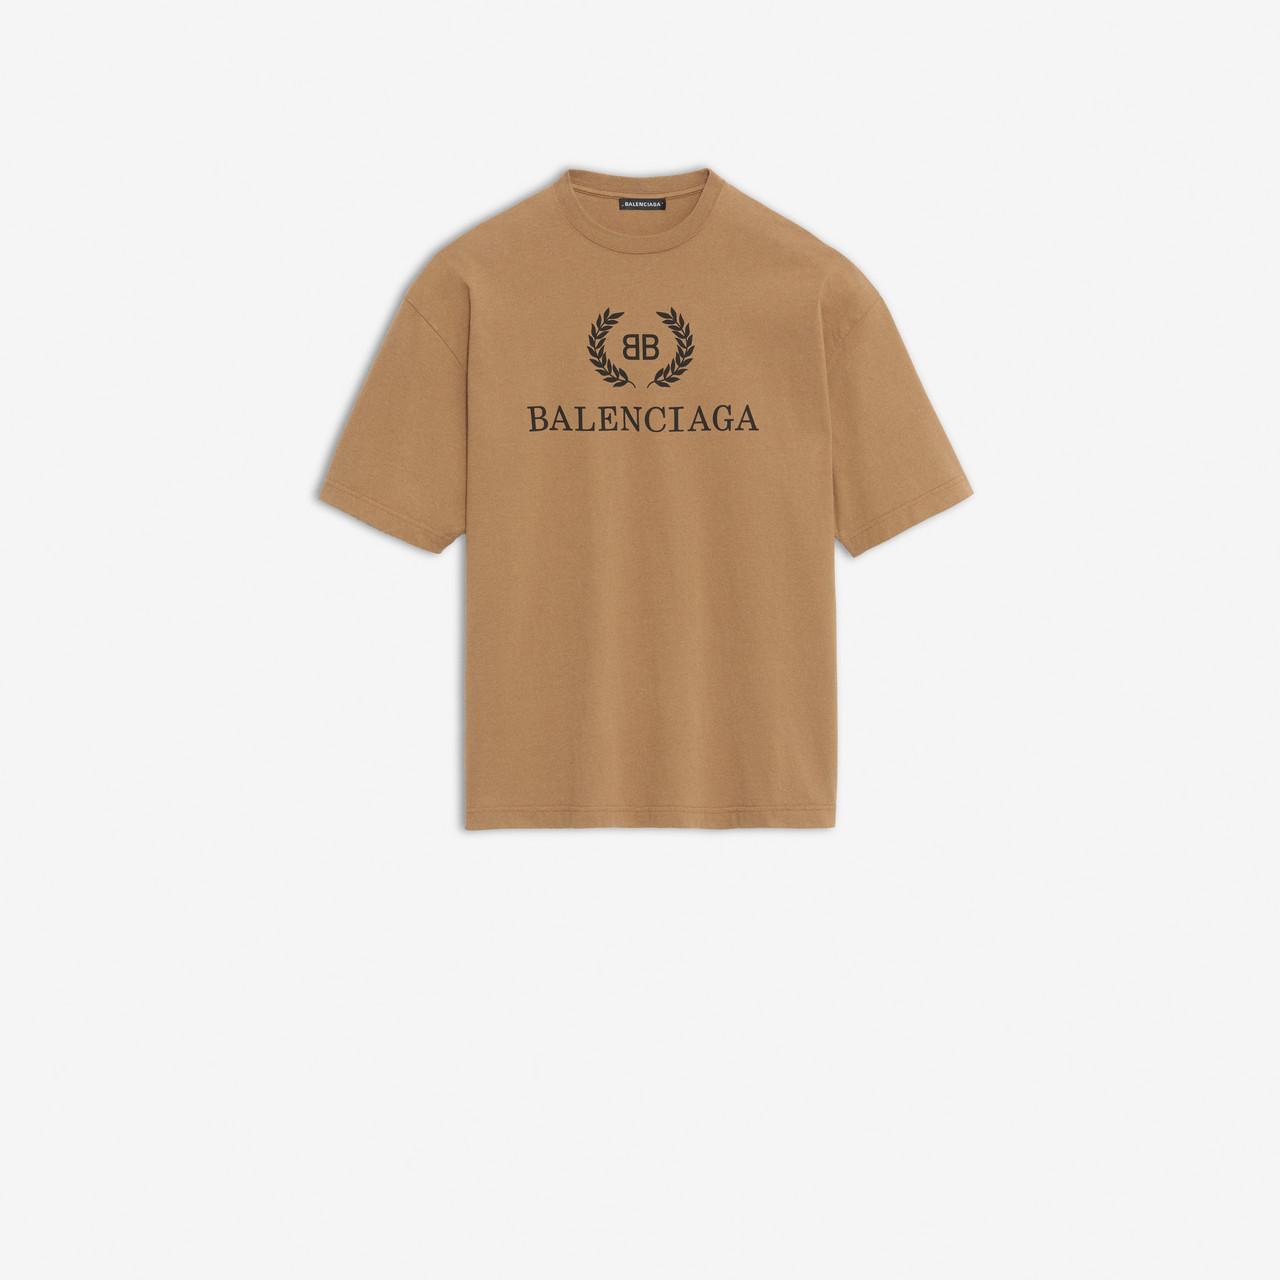 Balenciaga Cotton Bb T-shirt in Beige (Natural) for Men - Lyst